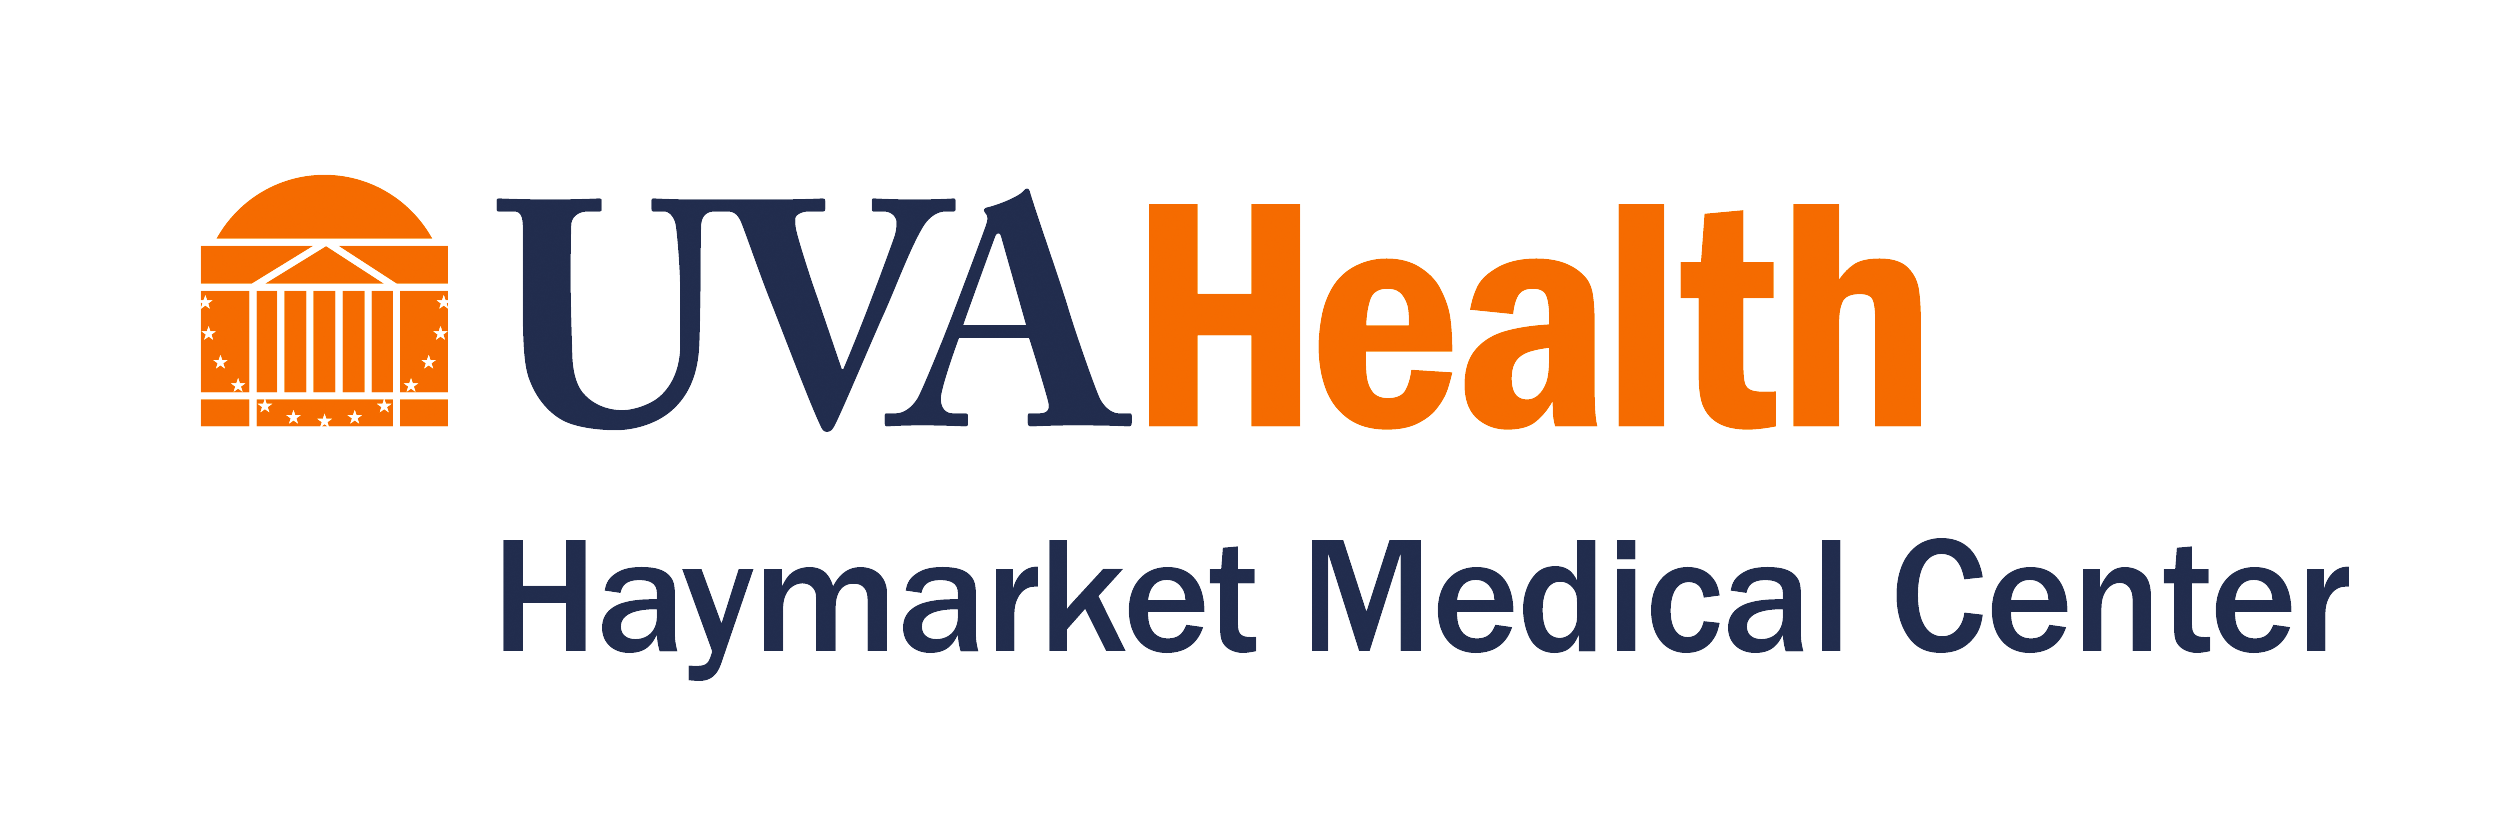 UVA Health Culpeper Logo